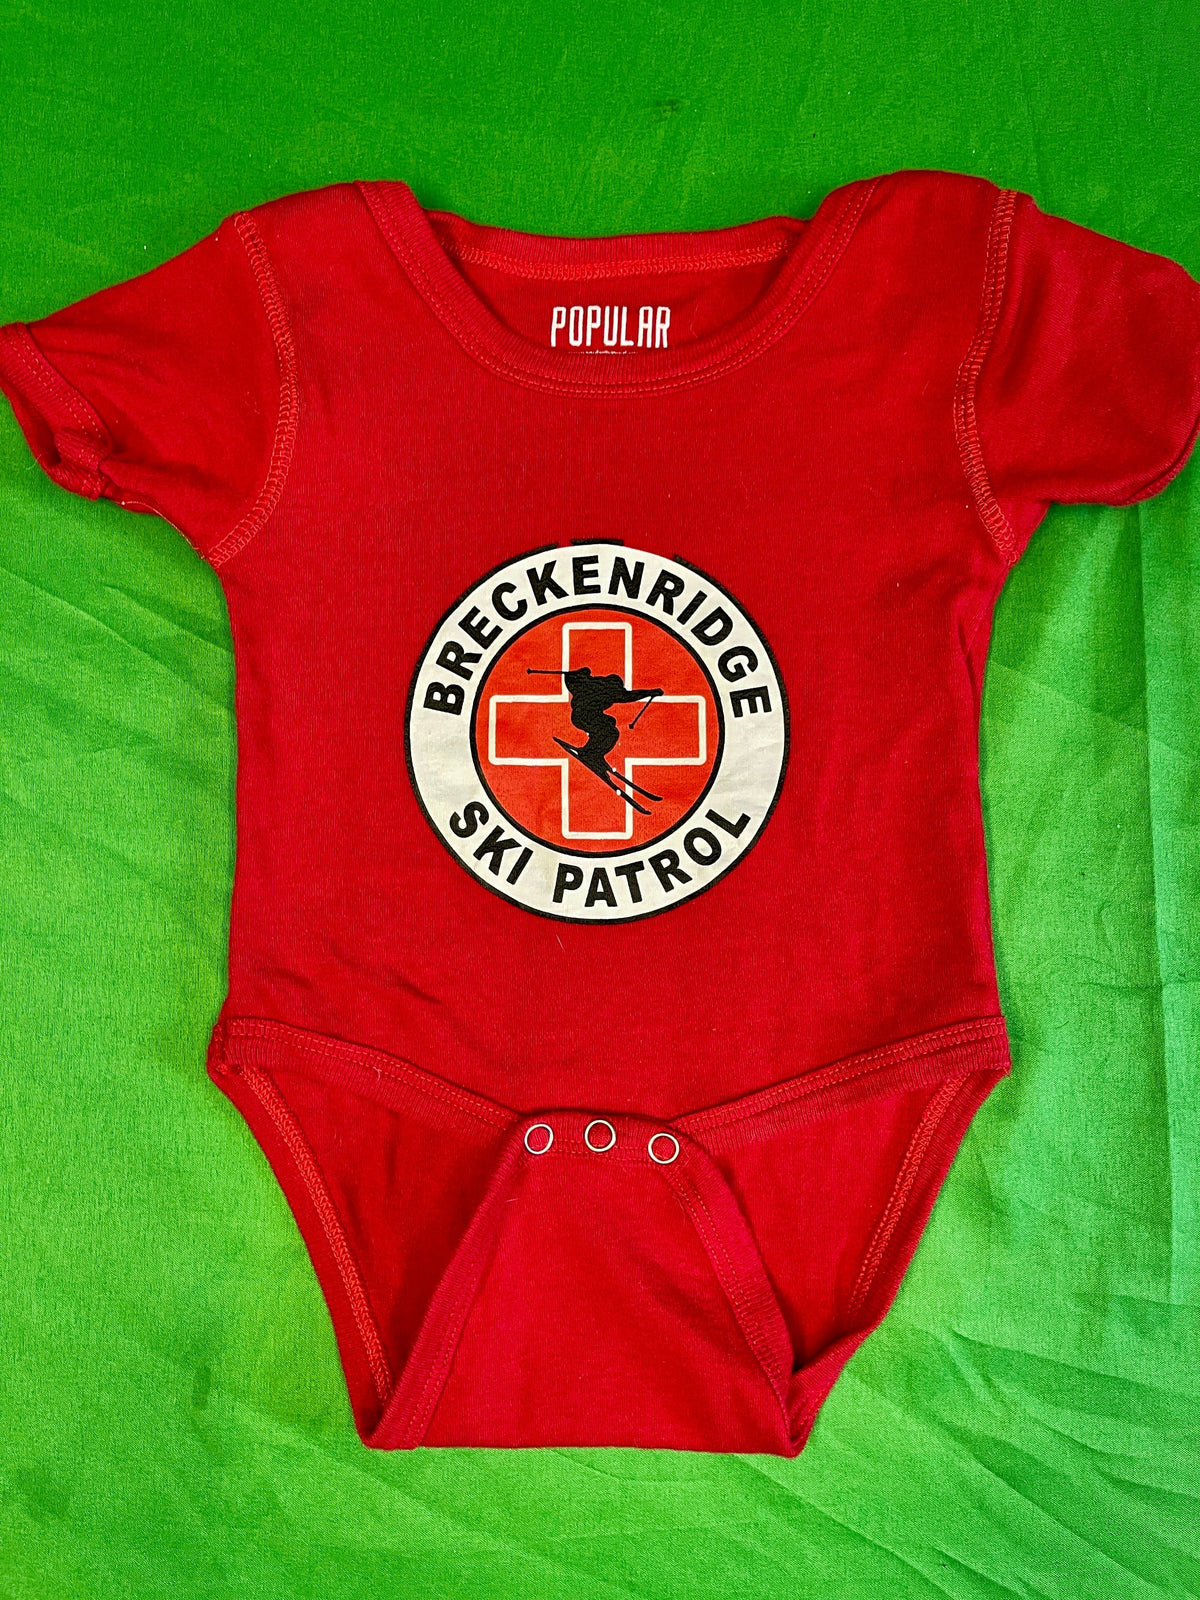 Beckenridge Ski Patrol Red Bodysuit/Vest Infant Toddler 18 Months